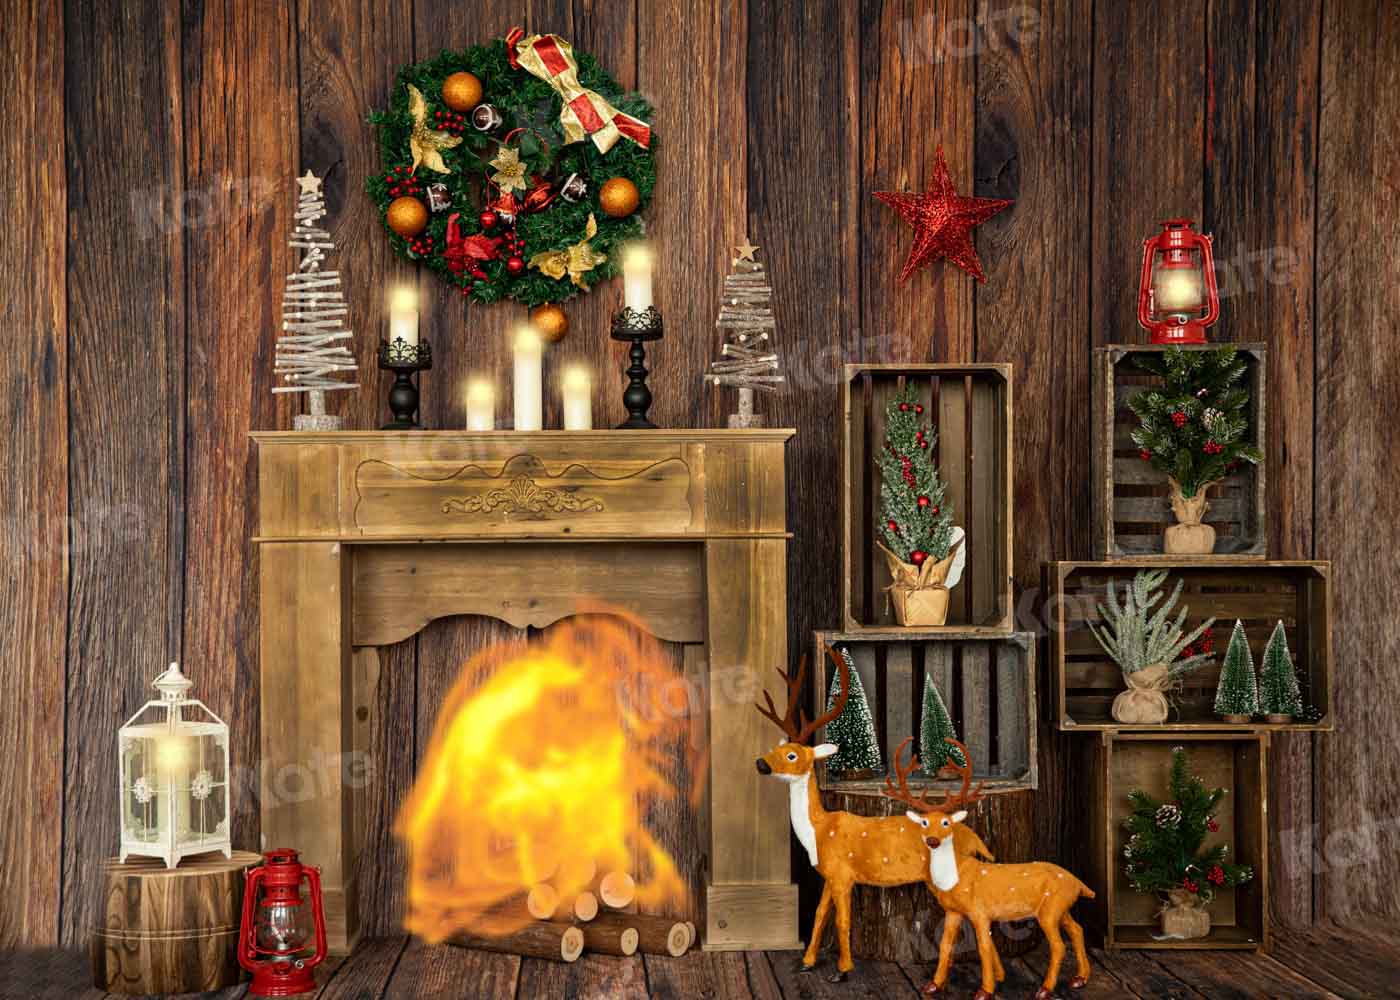 Kate Christmas Fireplace Backdrop Wood House Designed by Emetselch